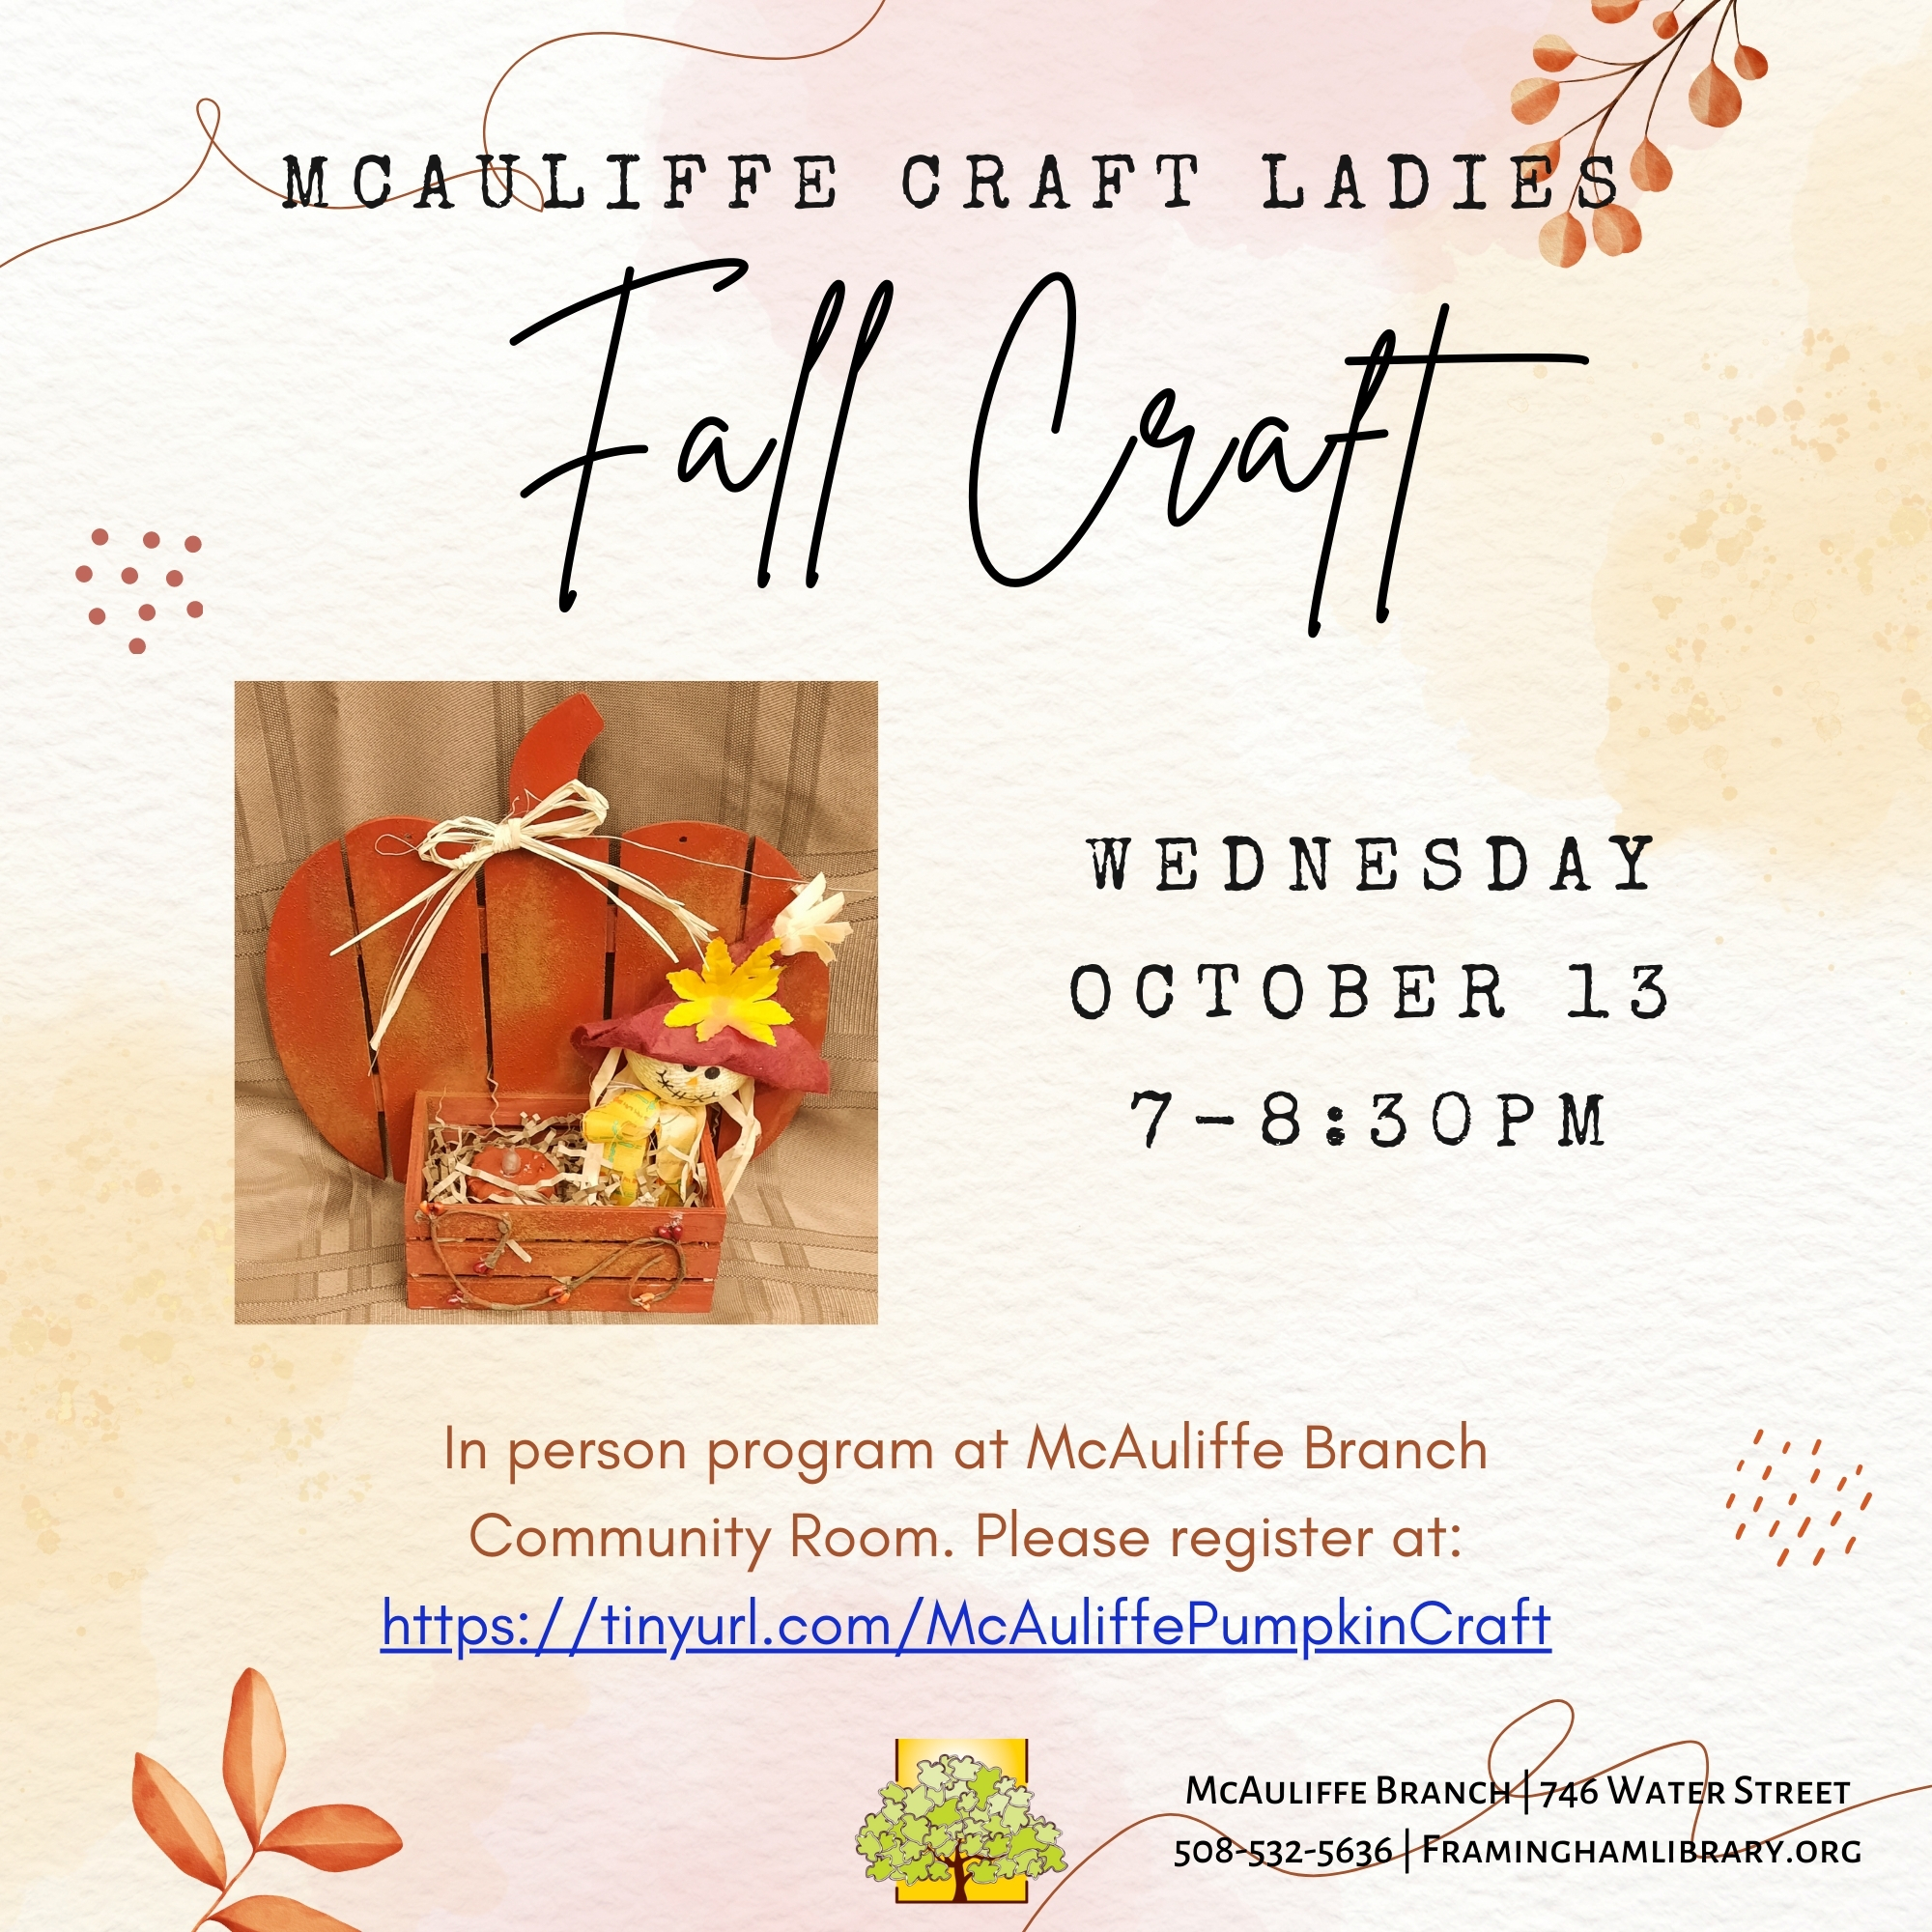 McAuliffe Craft Ladies - Fall Craft thumbnail Photo